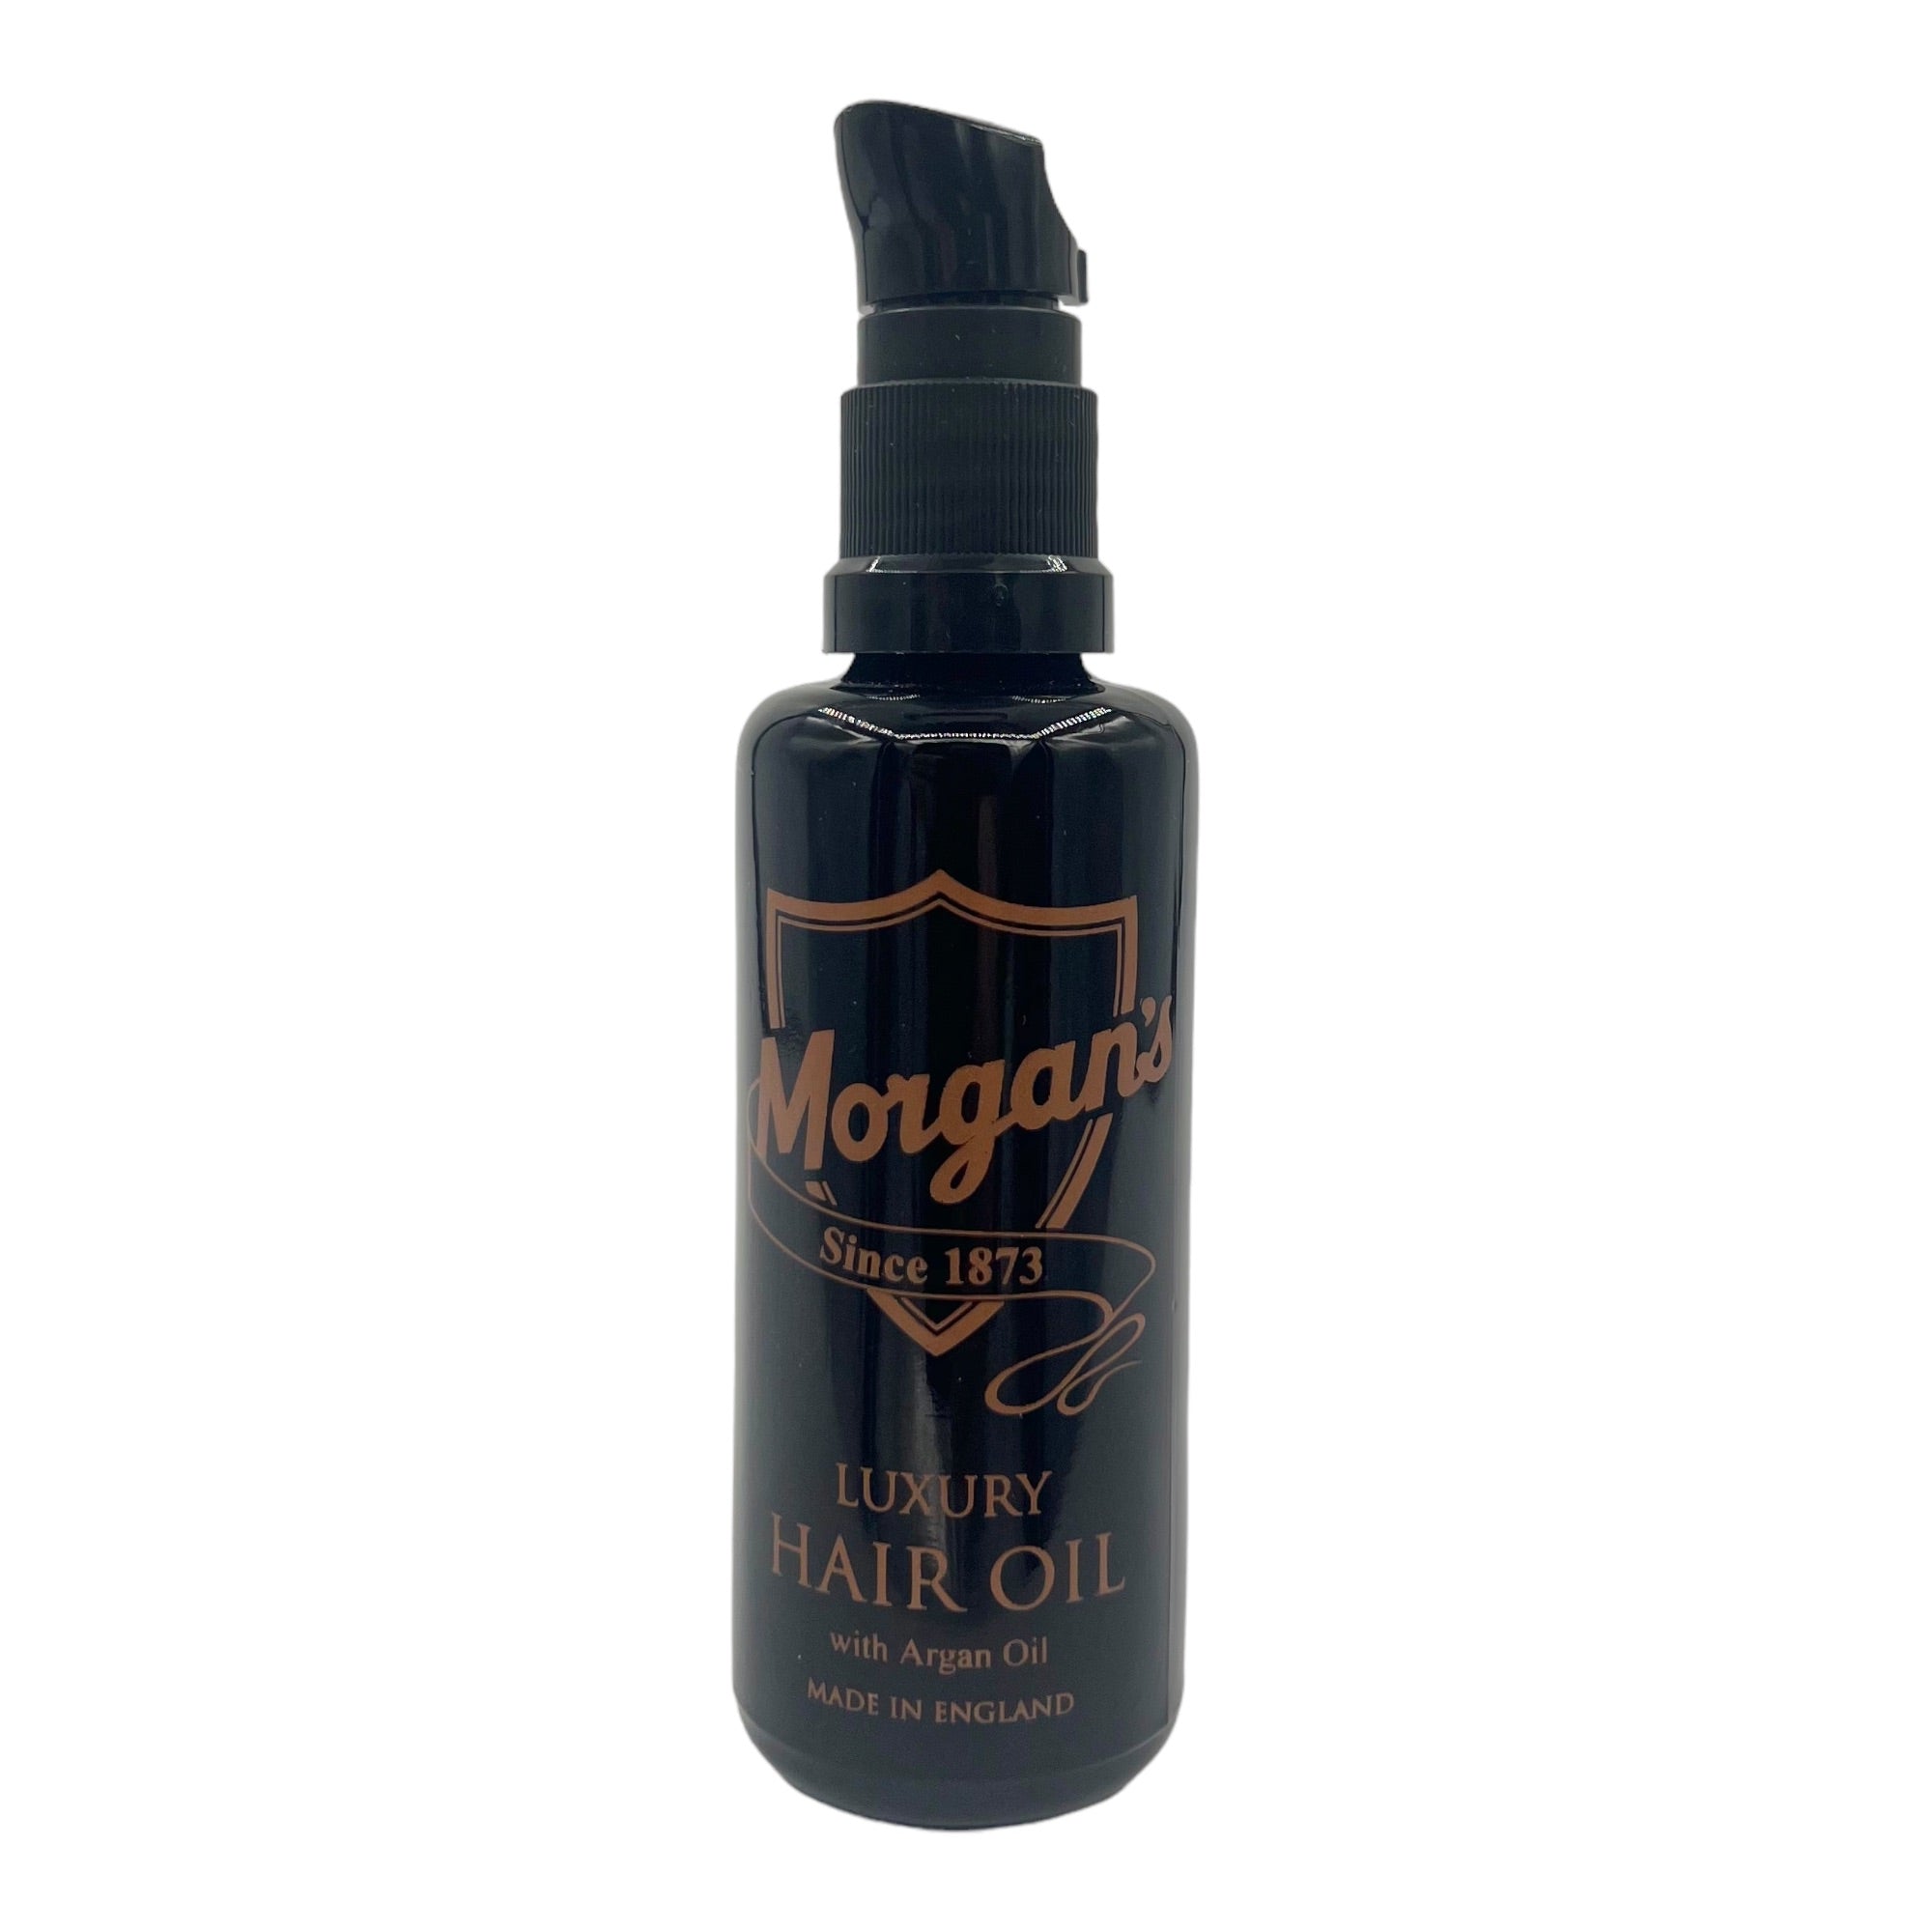 Morgan's - Luxury Hair Oil with Argan Oil 50ml